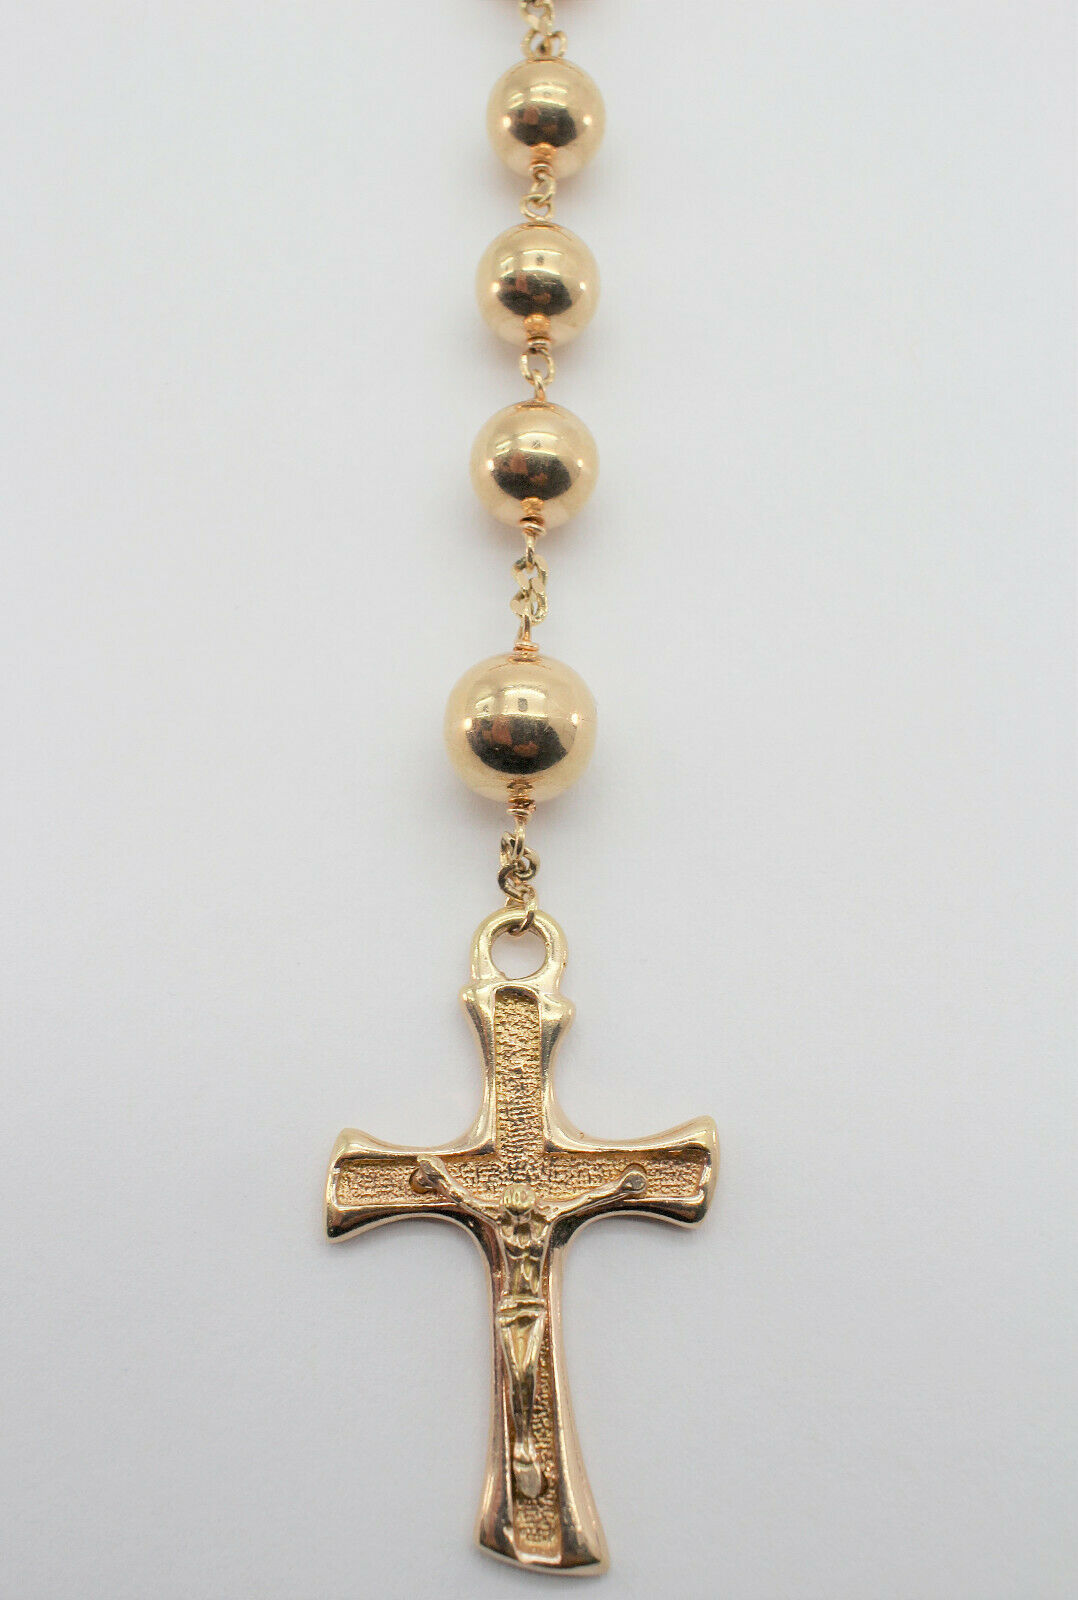 10K Gold Chain | 5mm Rosary Chain | Medusa jewelry - Medusa Jewelry